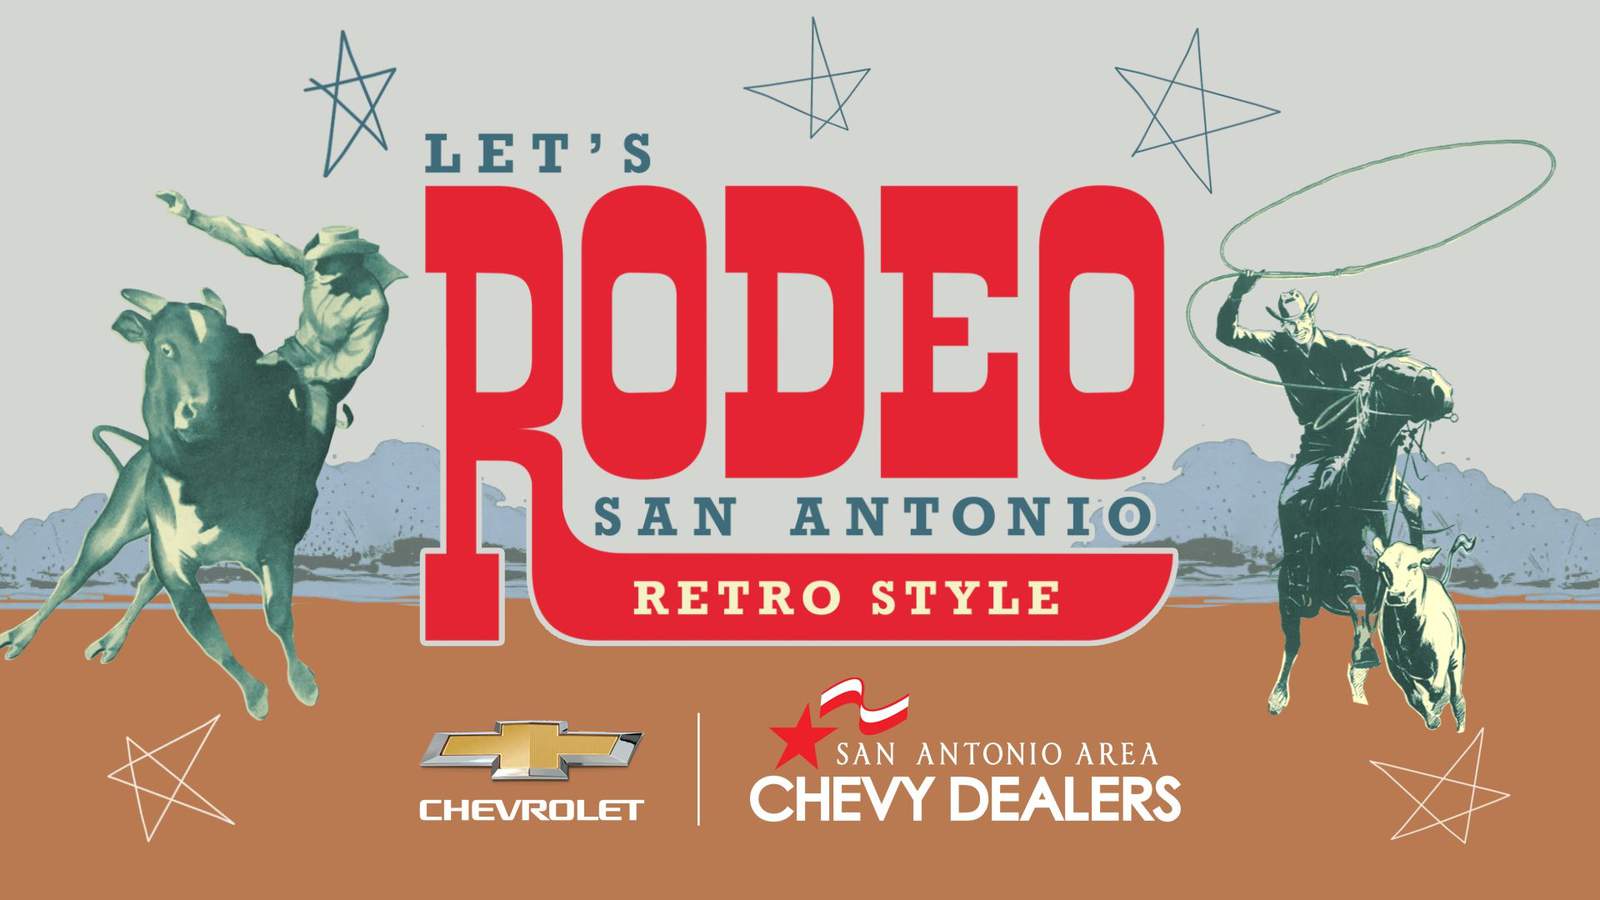 WATCH: KSAT’s ‘Let’s Rodeo San Antonio’ 2021 special